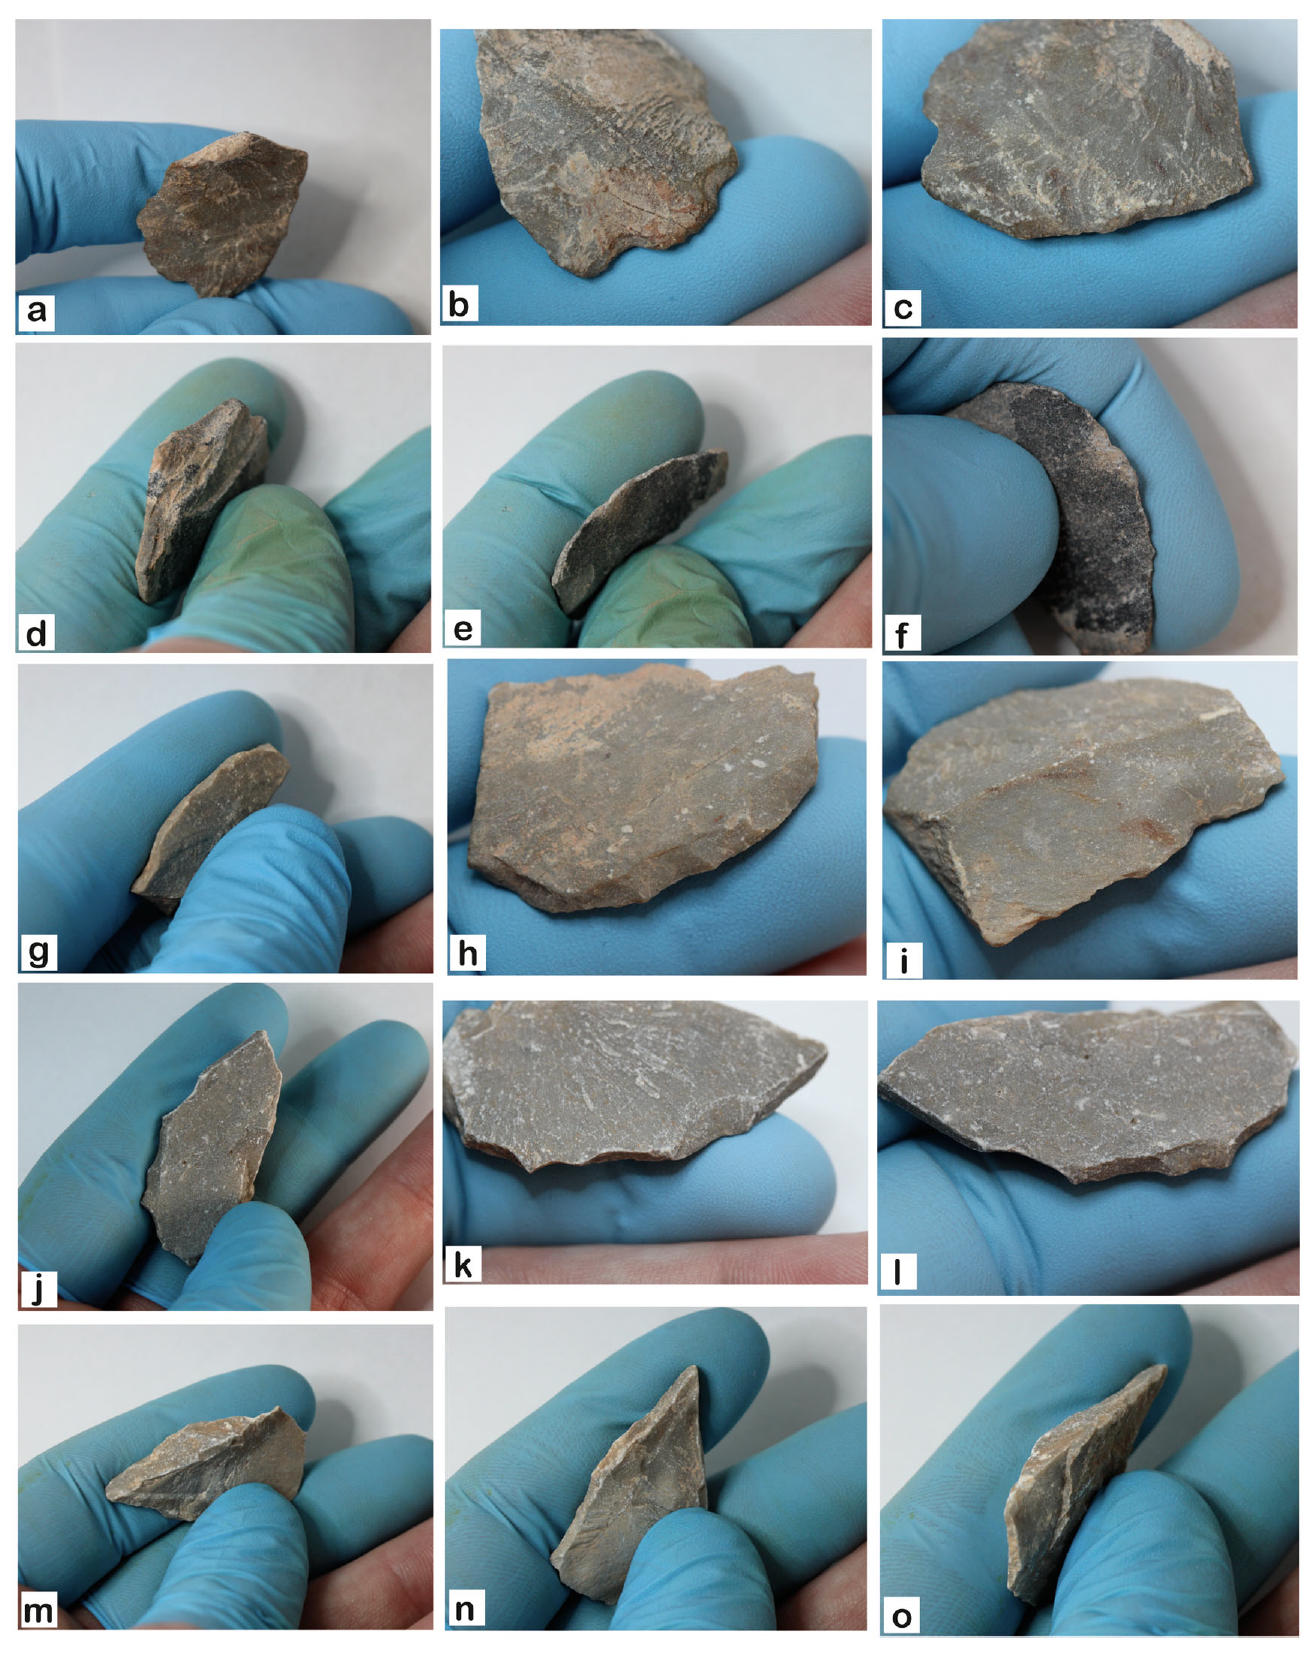 Apparent stone tools gathered at Chiquihuite Cave.  (Image: C. F. Ardelean et al., 2021)